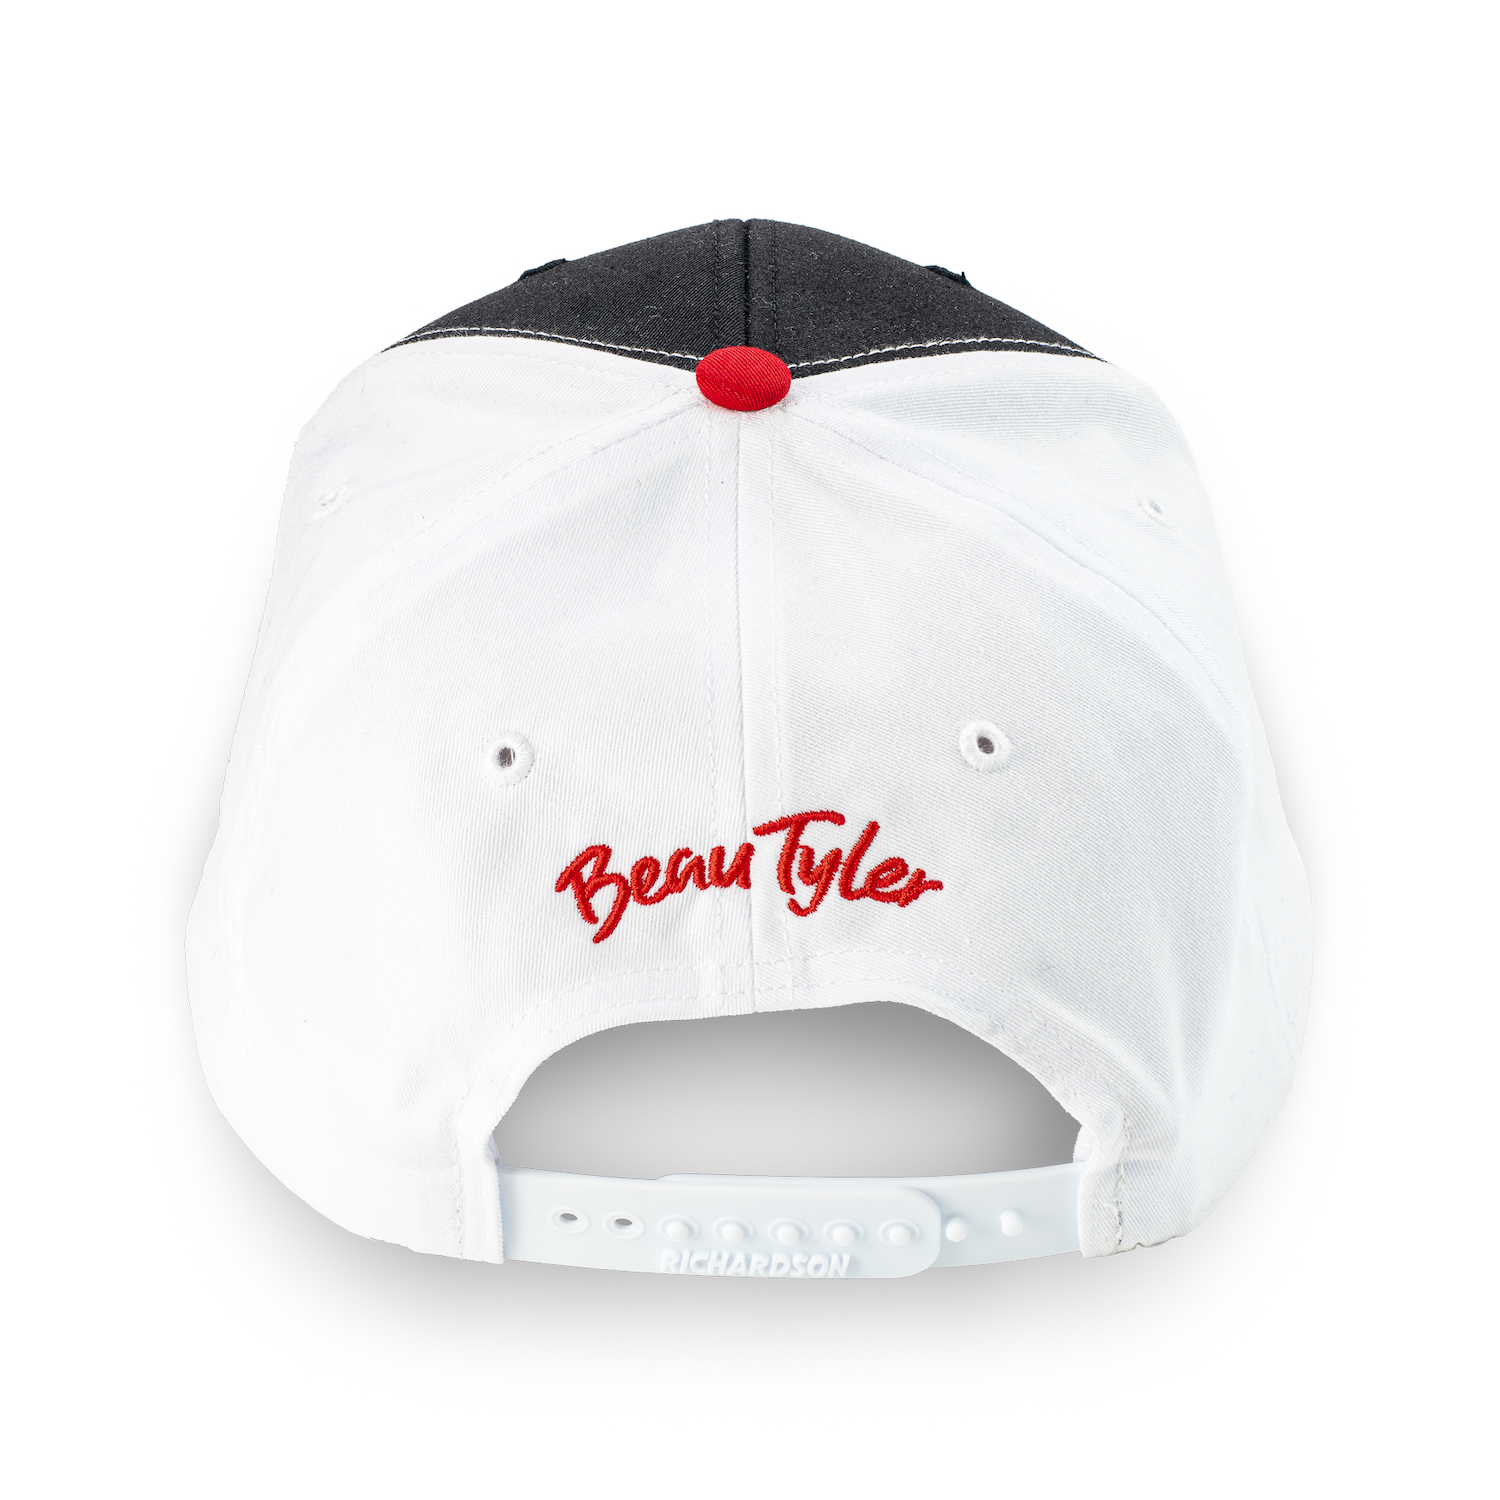 Beau Tyler - Sugar Ray baseball hat red black white back